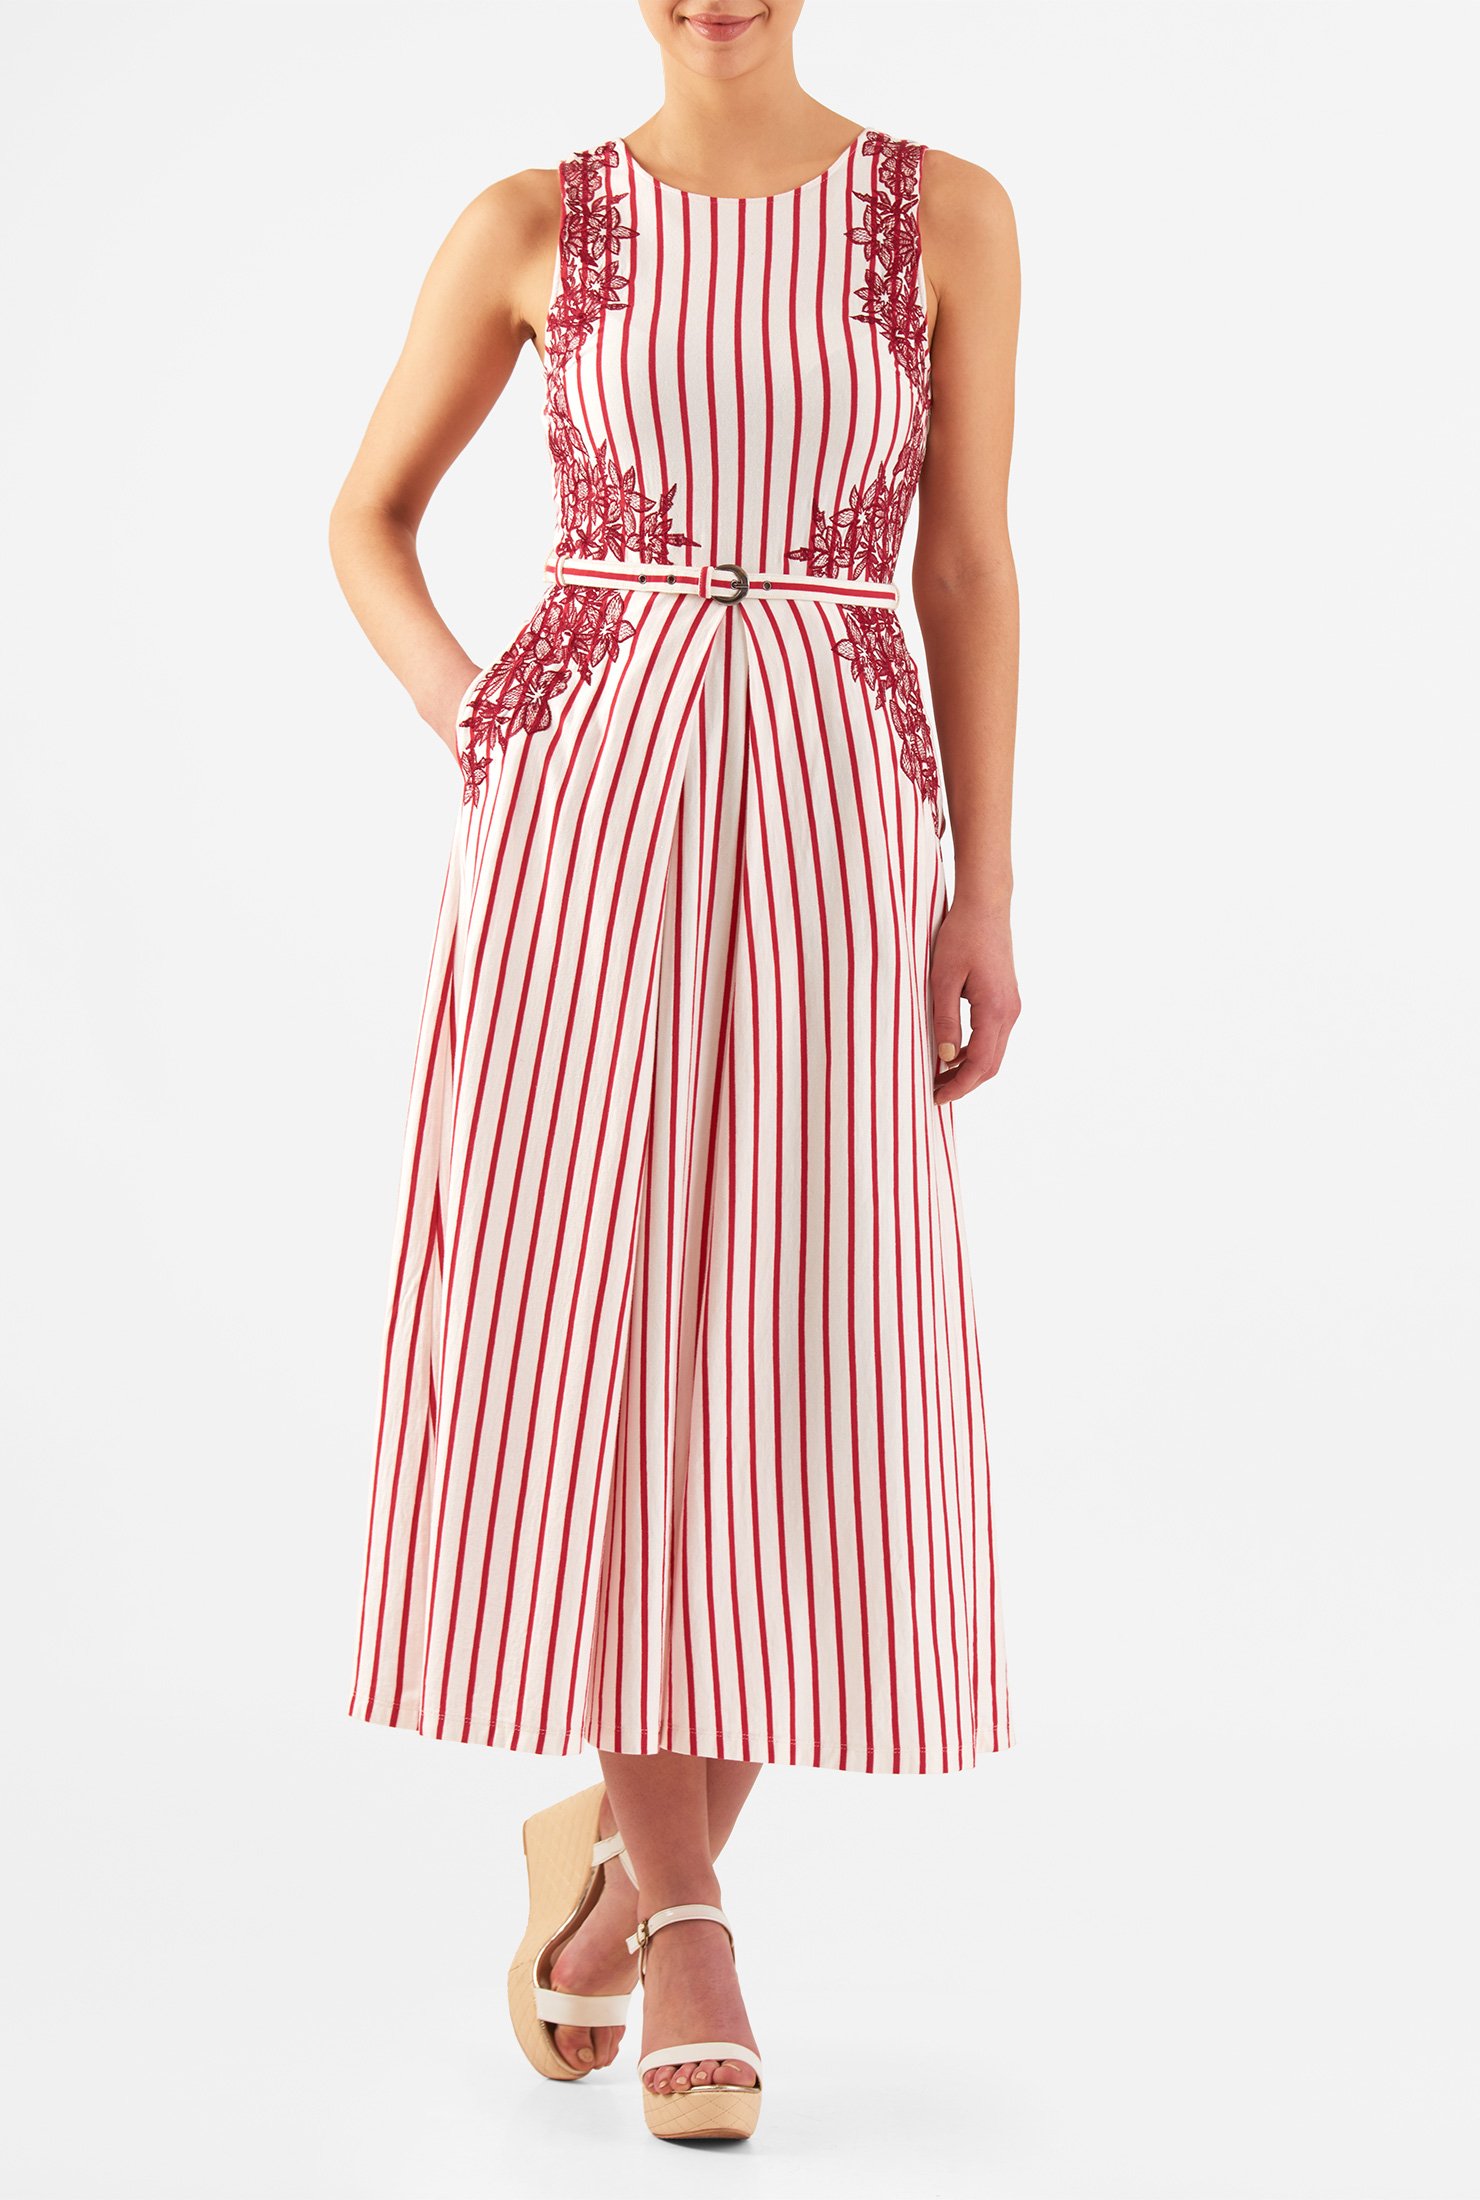 Shop Floral Embellished Stripe Cotton Knit Maxi Dress Eshakti 6417